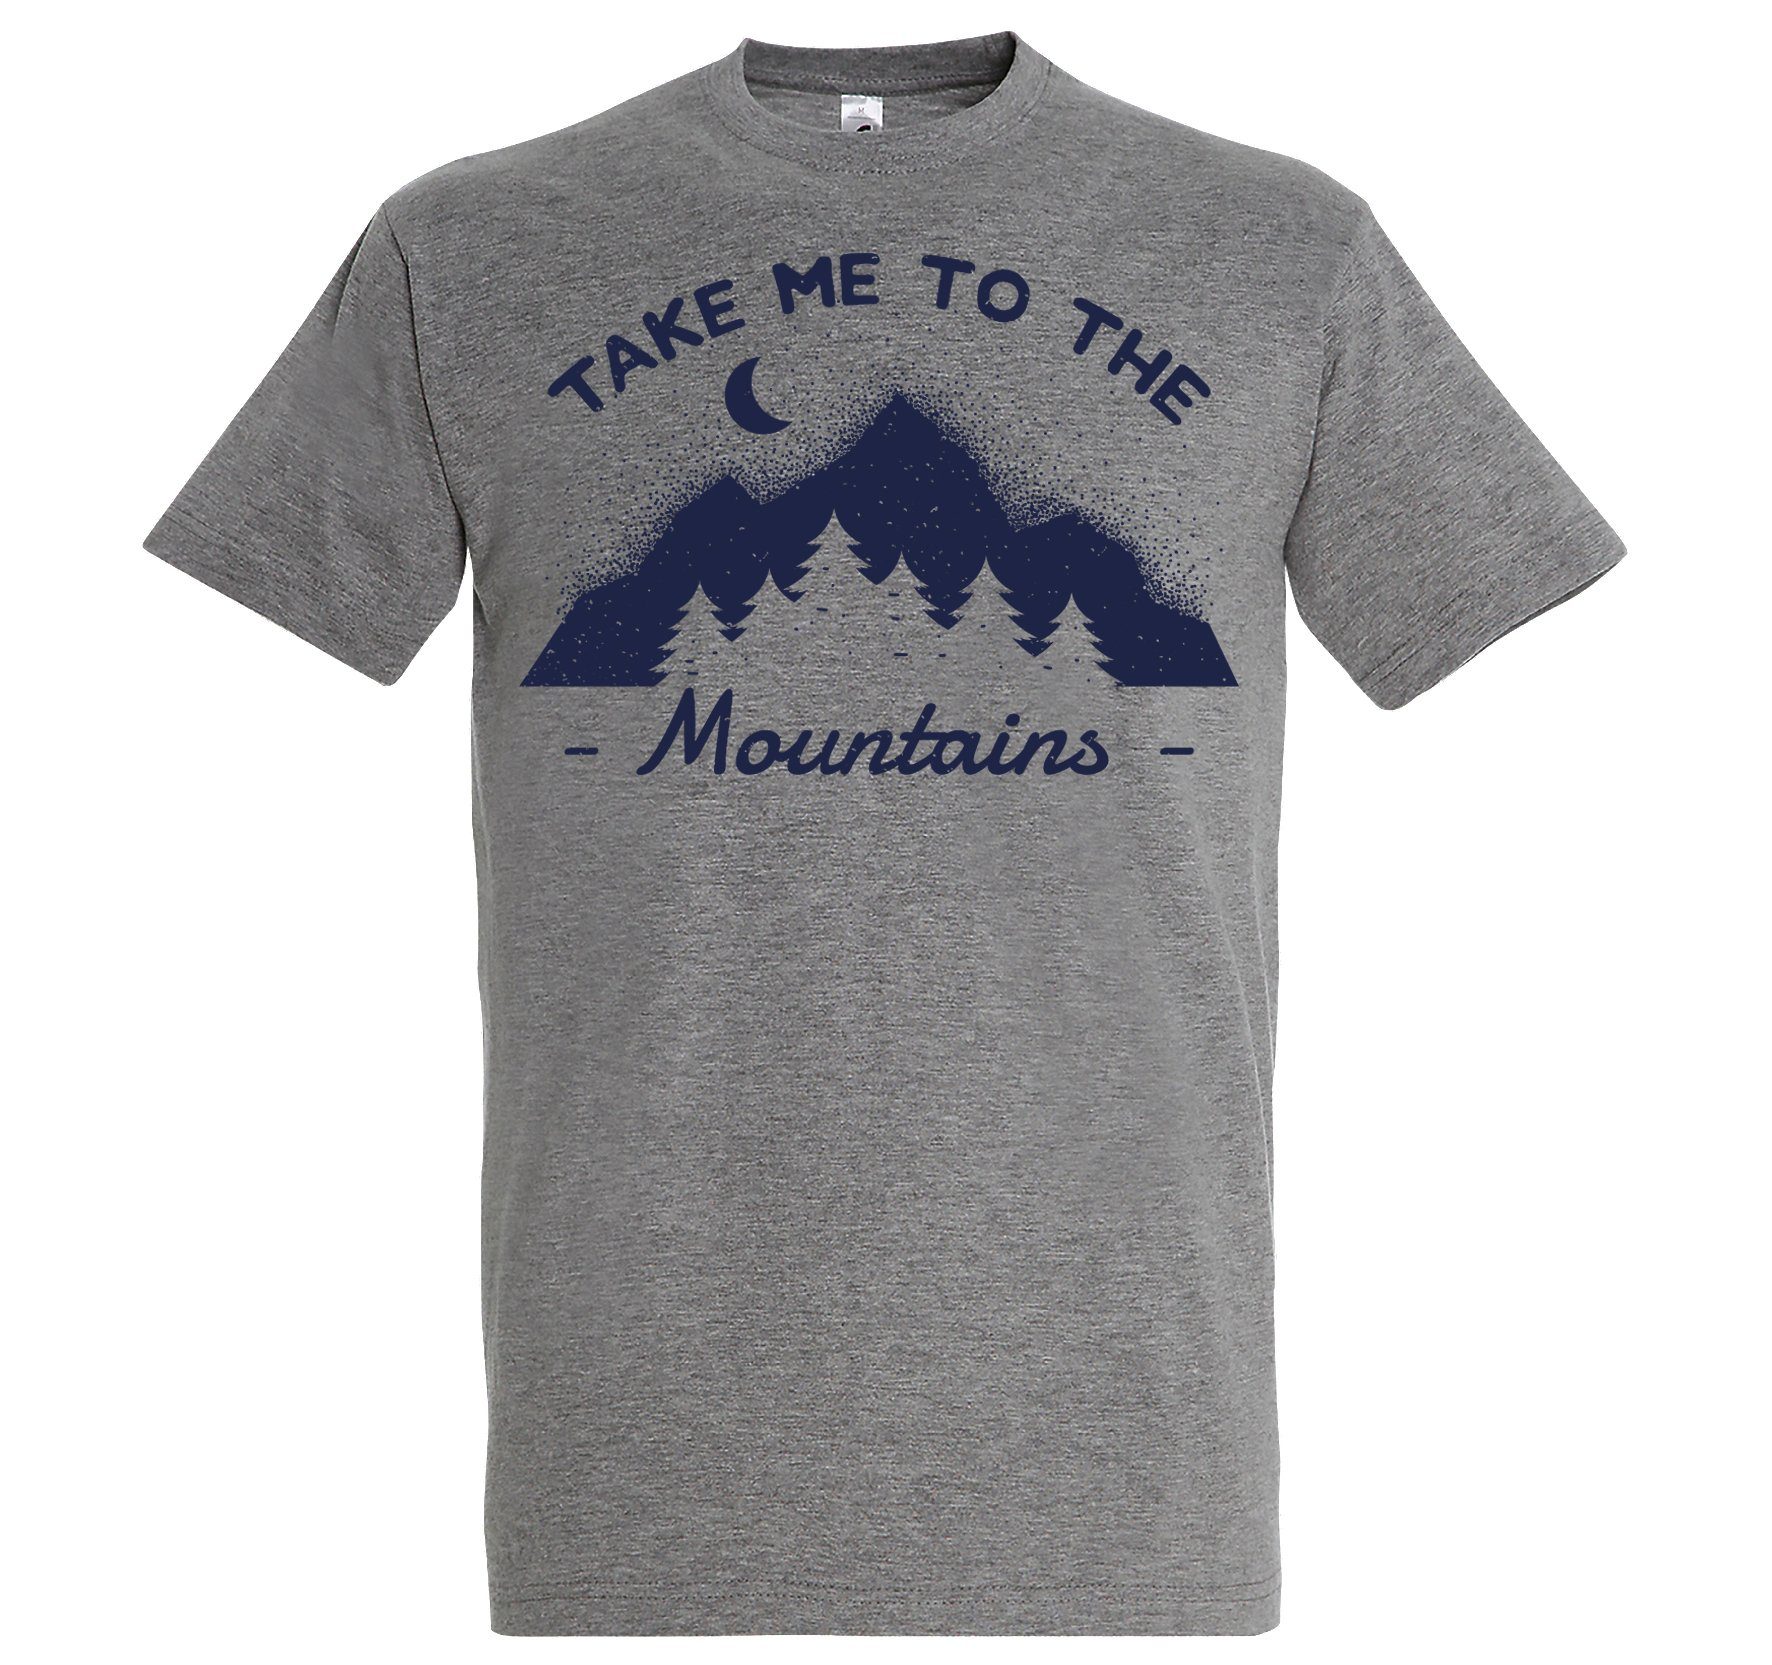 me to T-Shirt mit Mountains Designz Frontdruck Take T-Shirt Grau Youth Herren the Trendigem